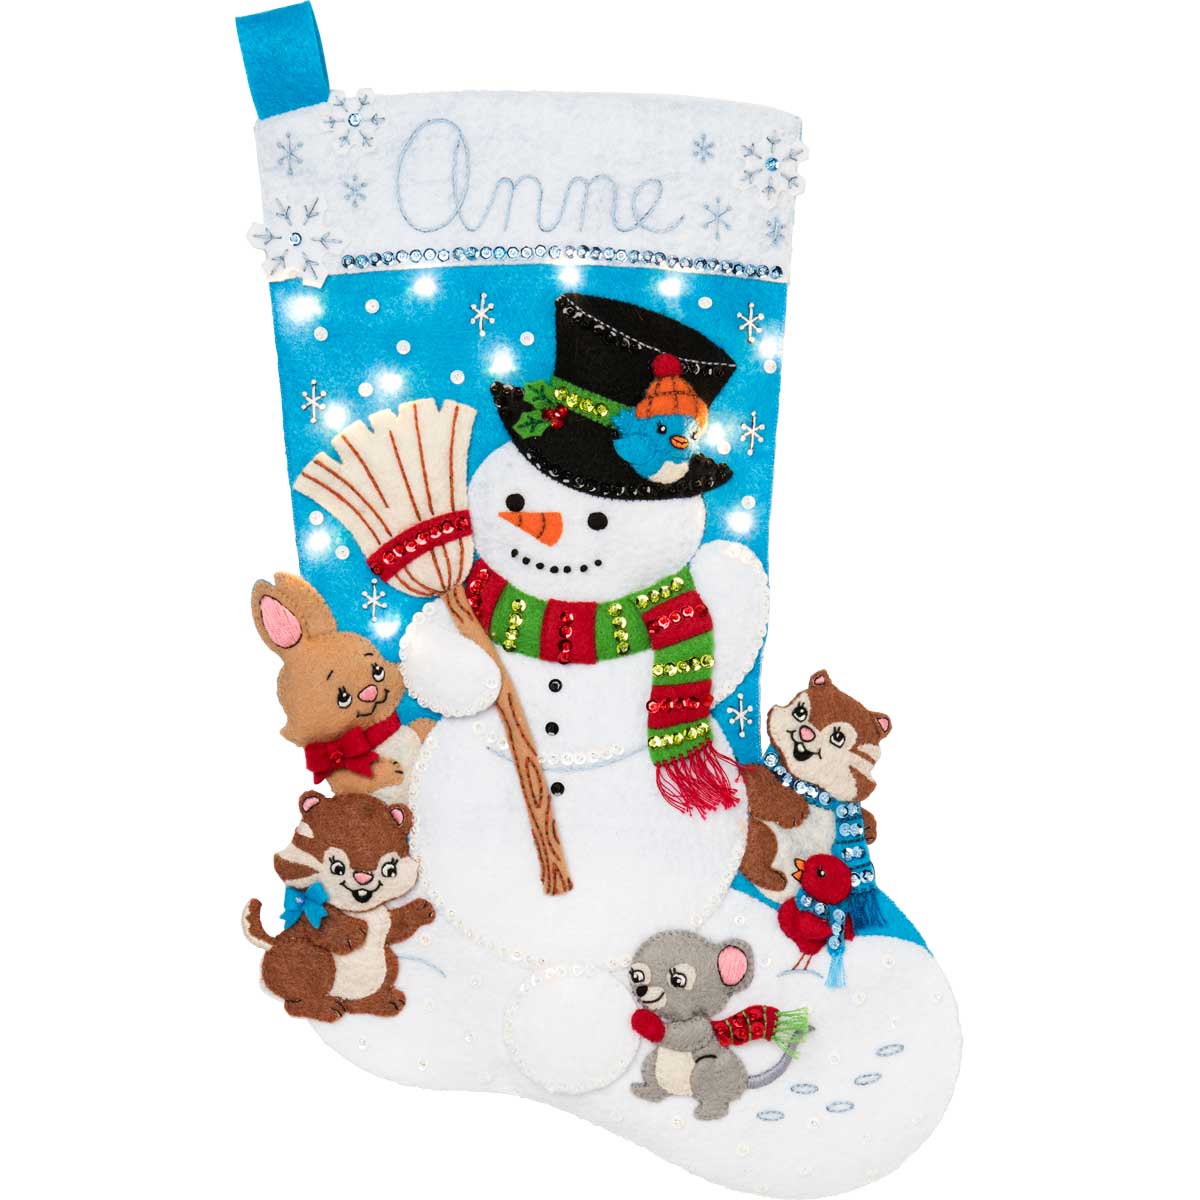 Bucilla ® Seasonal - Felt - Stocking Kits - Hallmark - Snow Much Fun with Lights - 86880